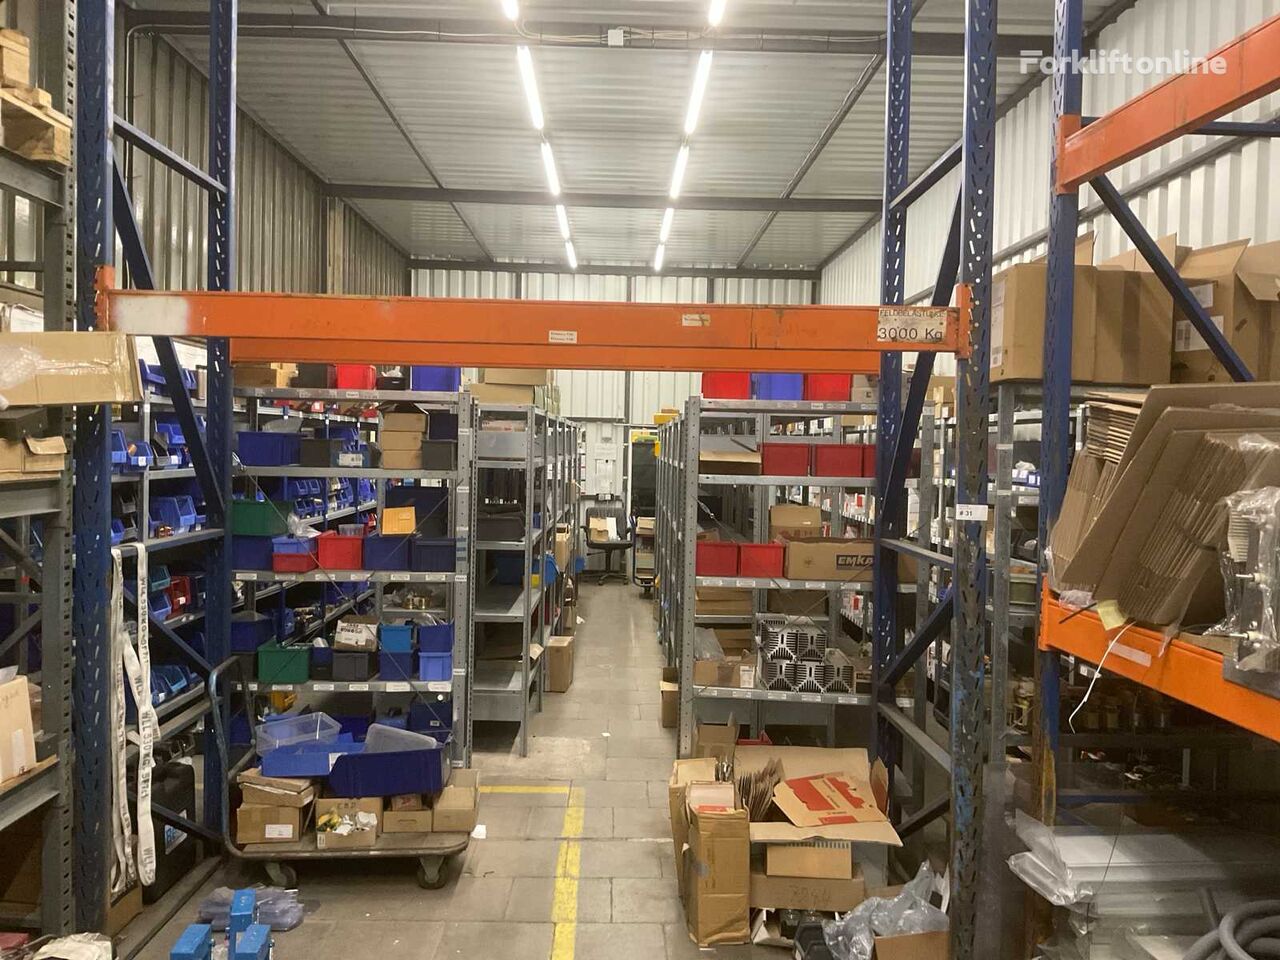 Lagerregal warehouse shelving